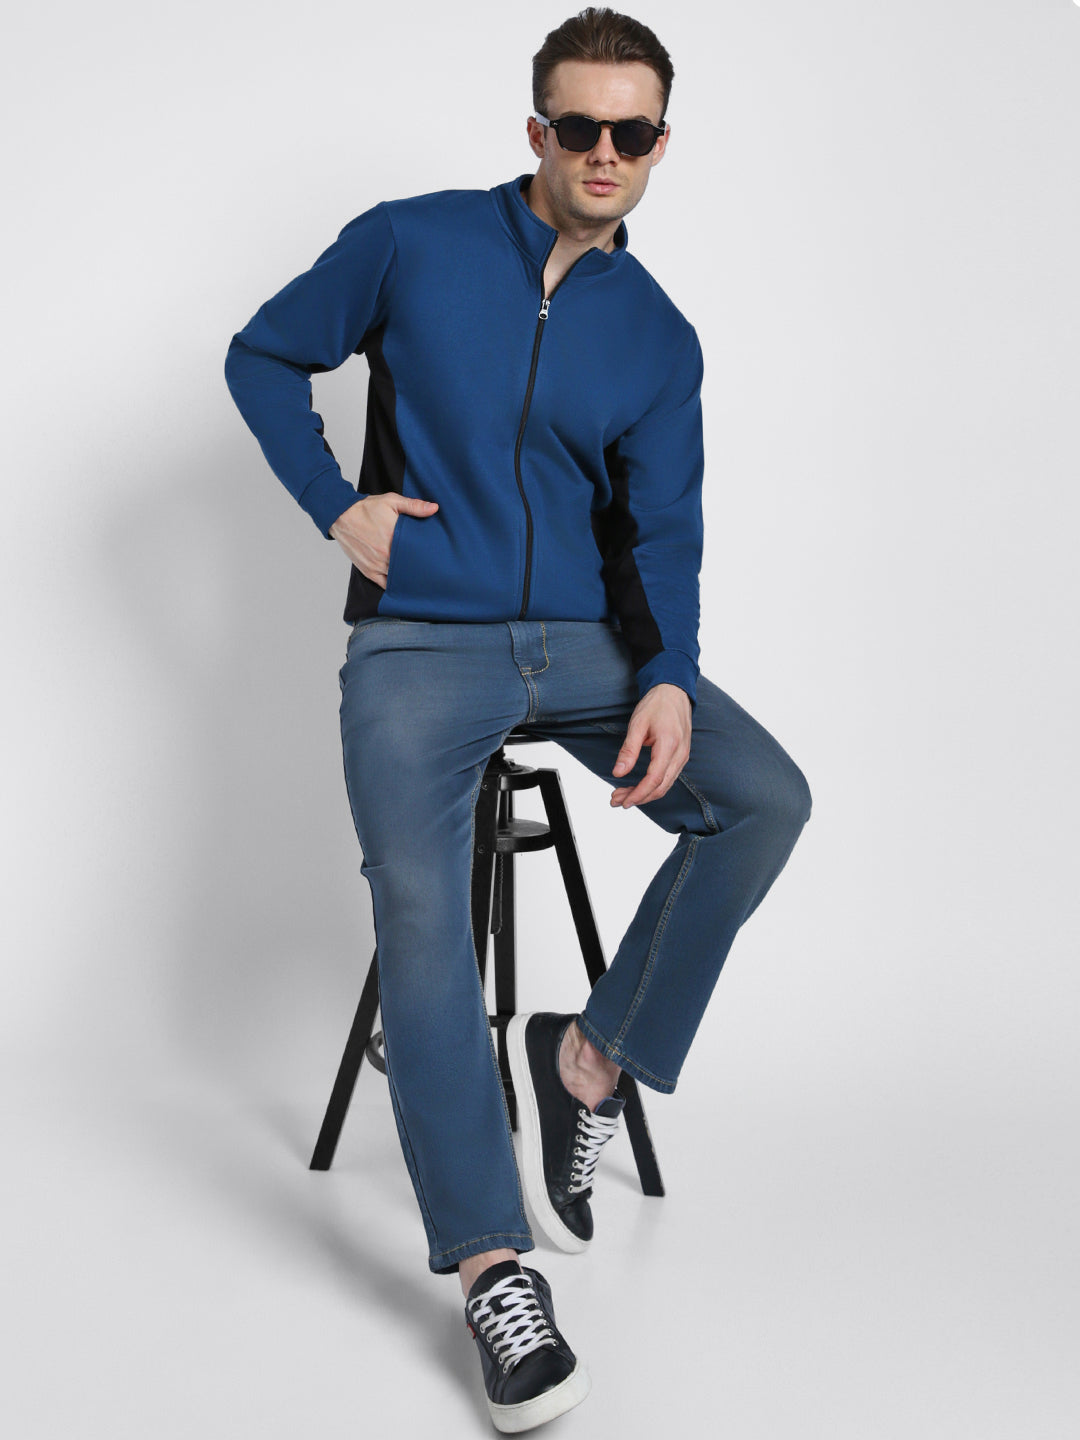 Dennis Lingo Men's Blue Mock Neck Full Sleeves Zipper front Sweatshirt